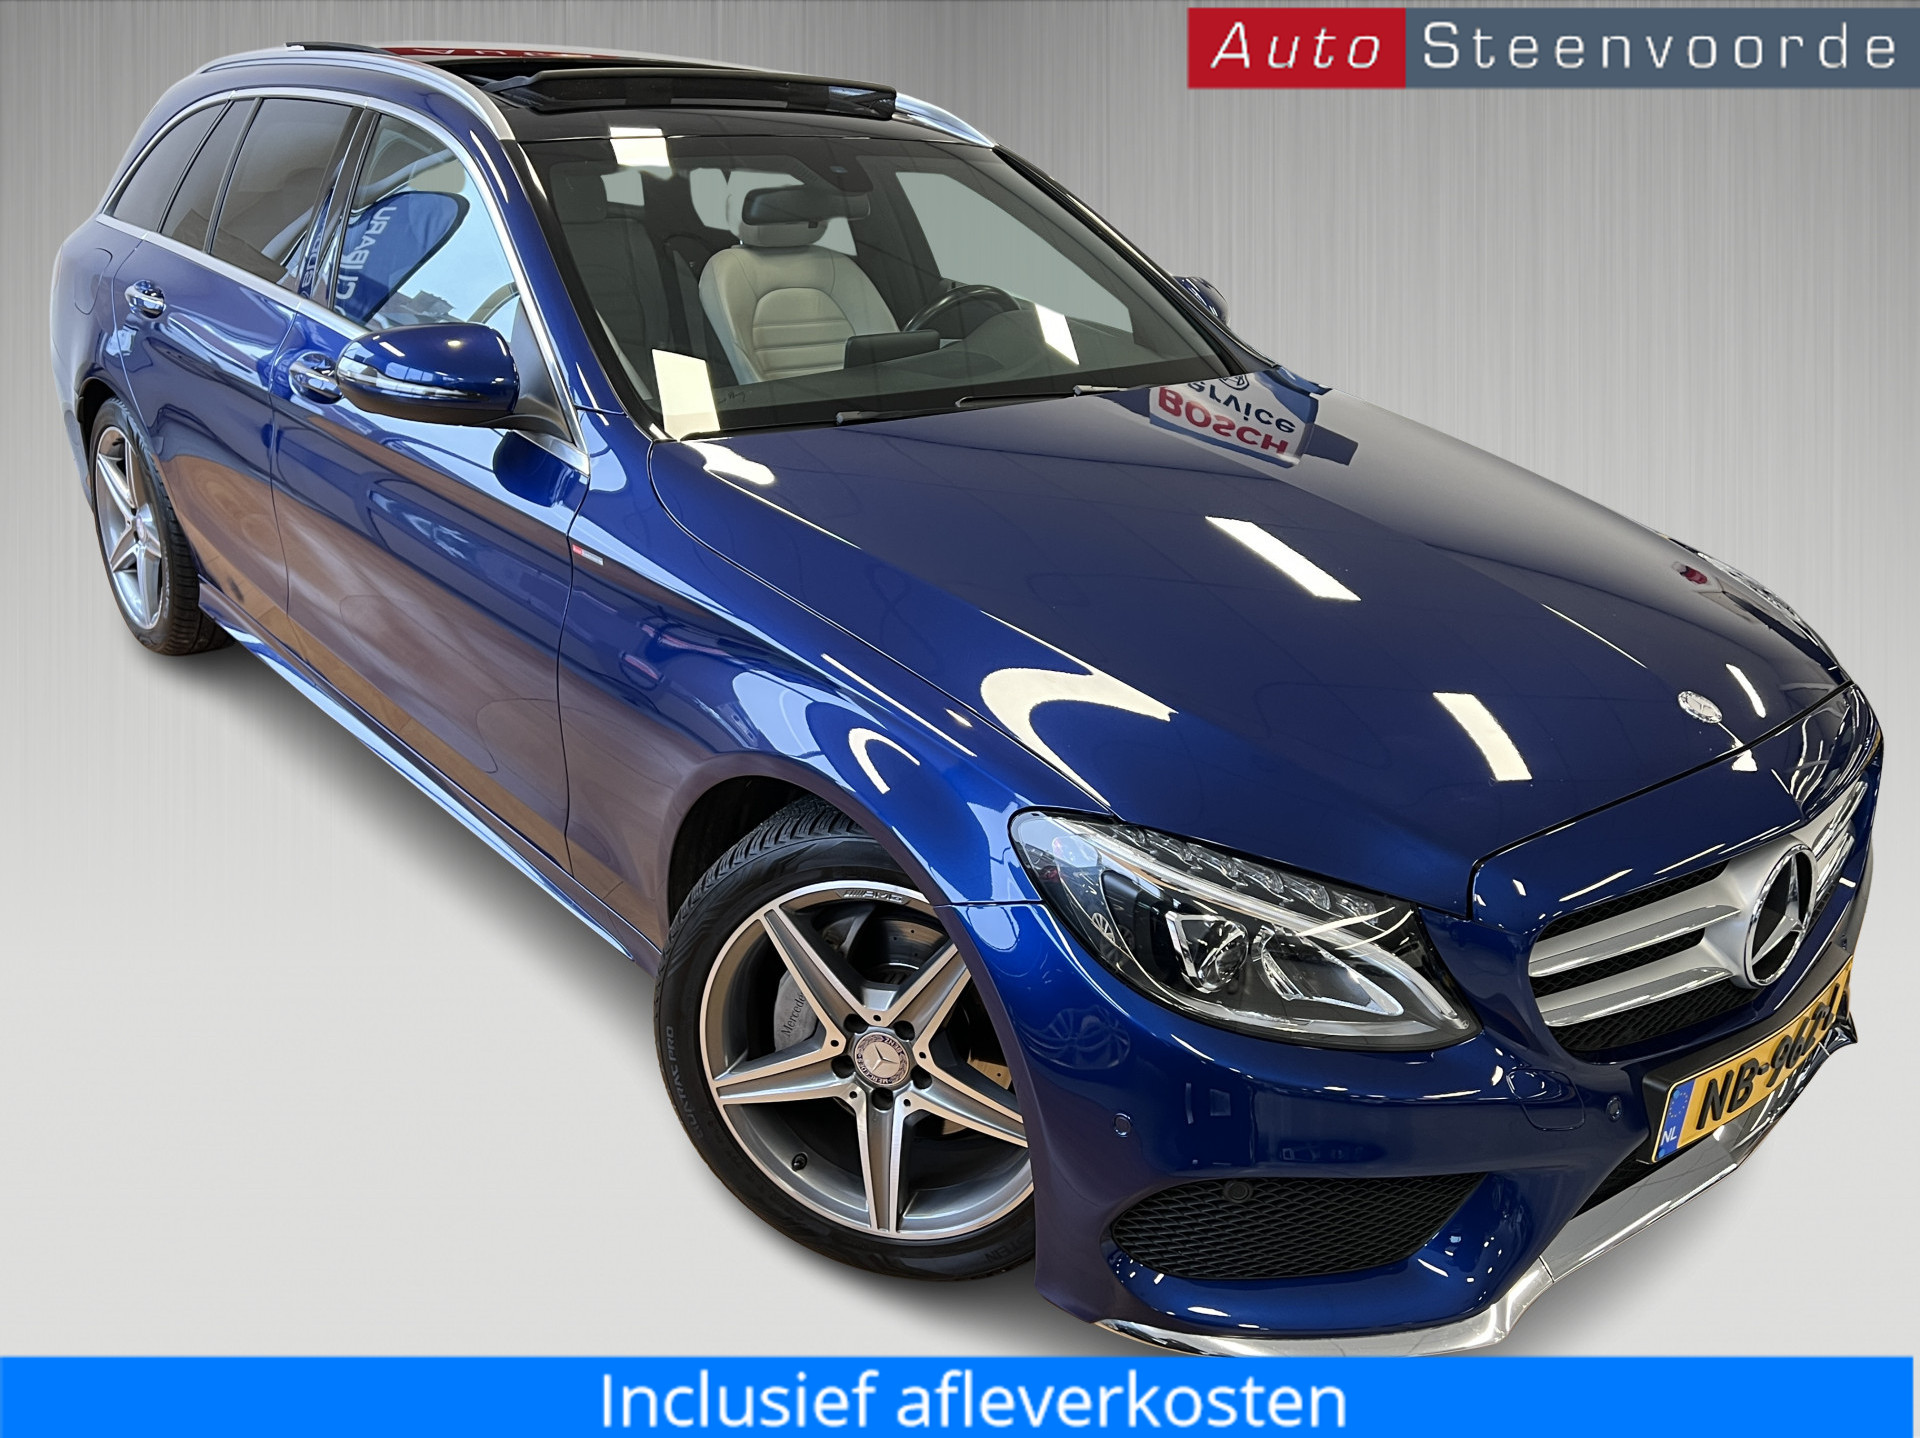 Mercedes-Benz C-Klasse Estate 180 AMG Sport Edition I Burmester audiosysteem I Panorama dak I Keyless entry I bij viaBOVAG.nl